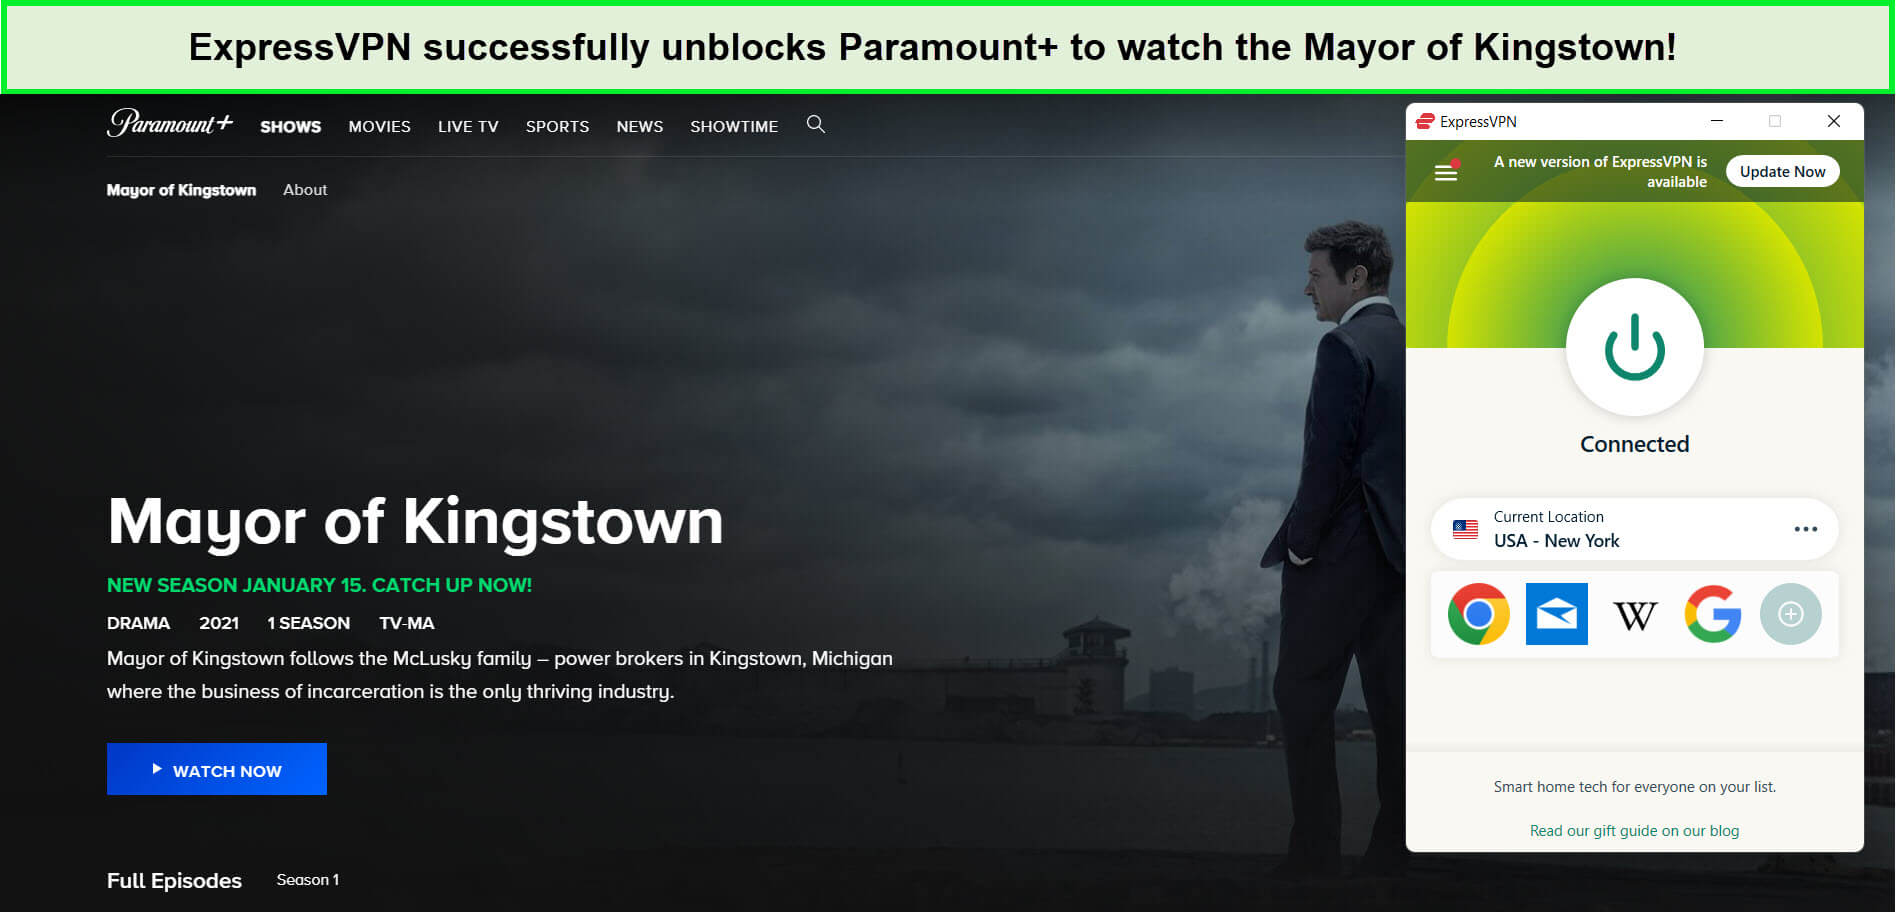 expressvpn-unblocks-paramount-plus-for-mayor-of-kingstown-in-new-zealand